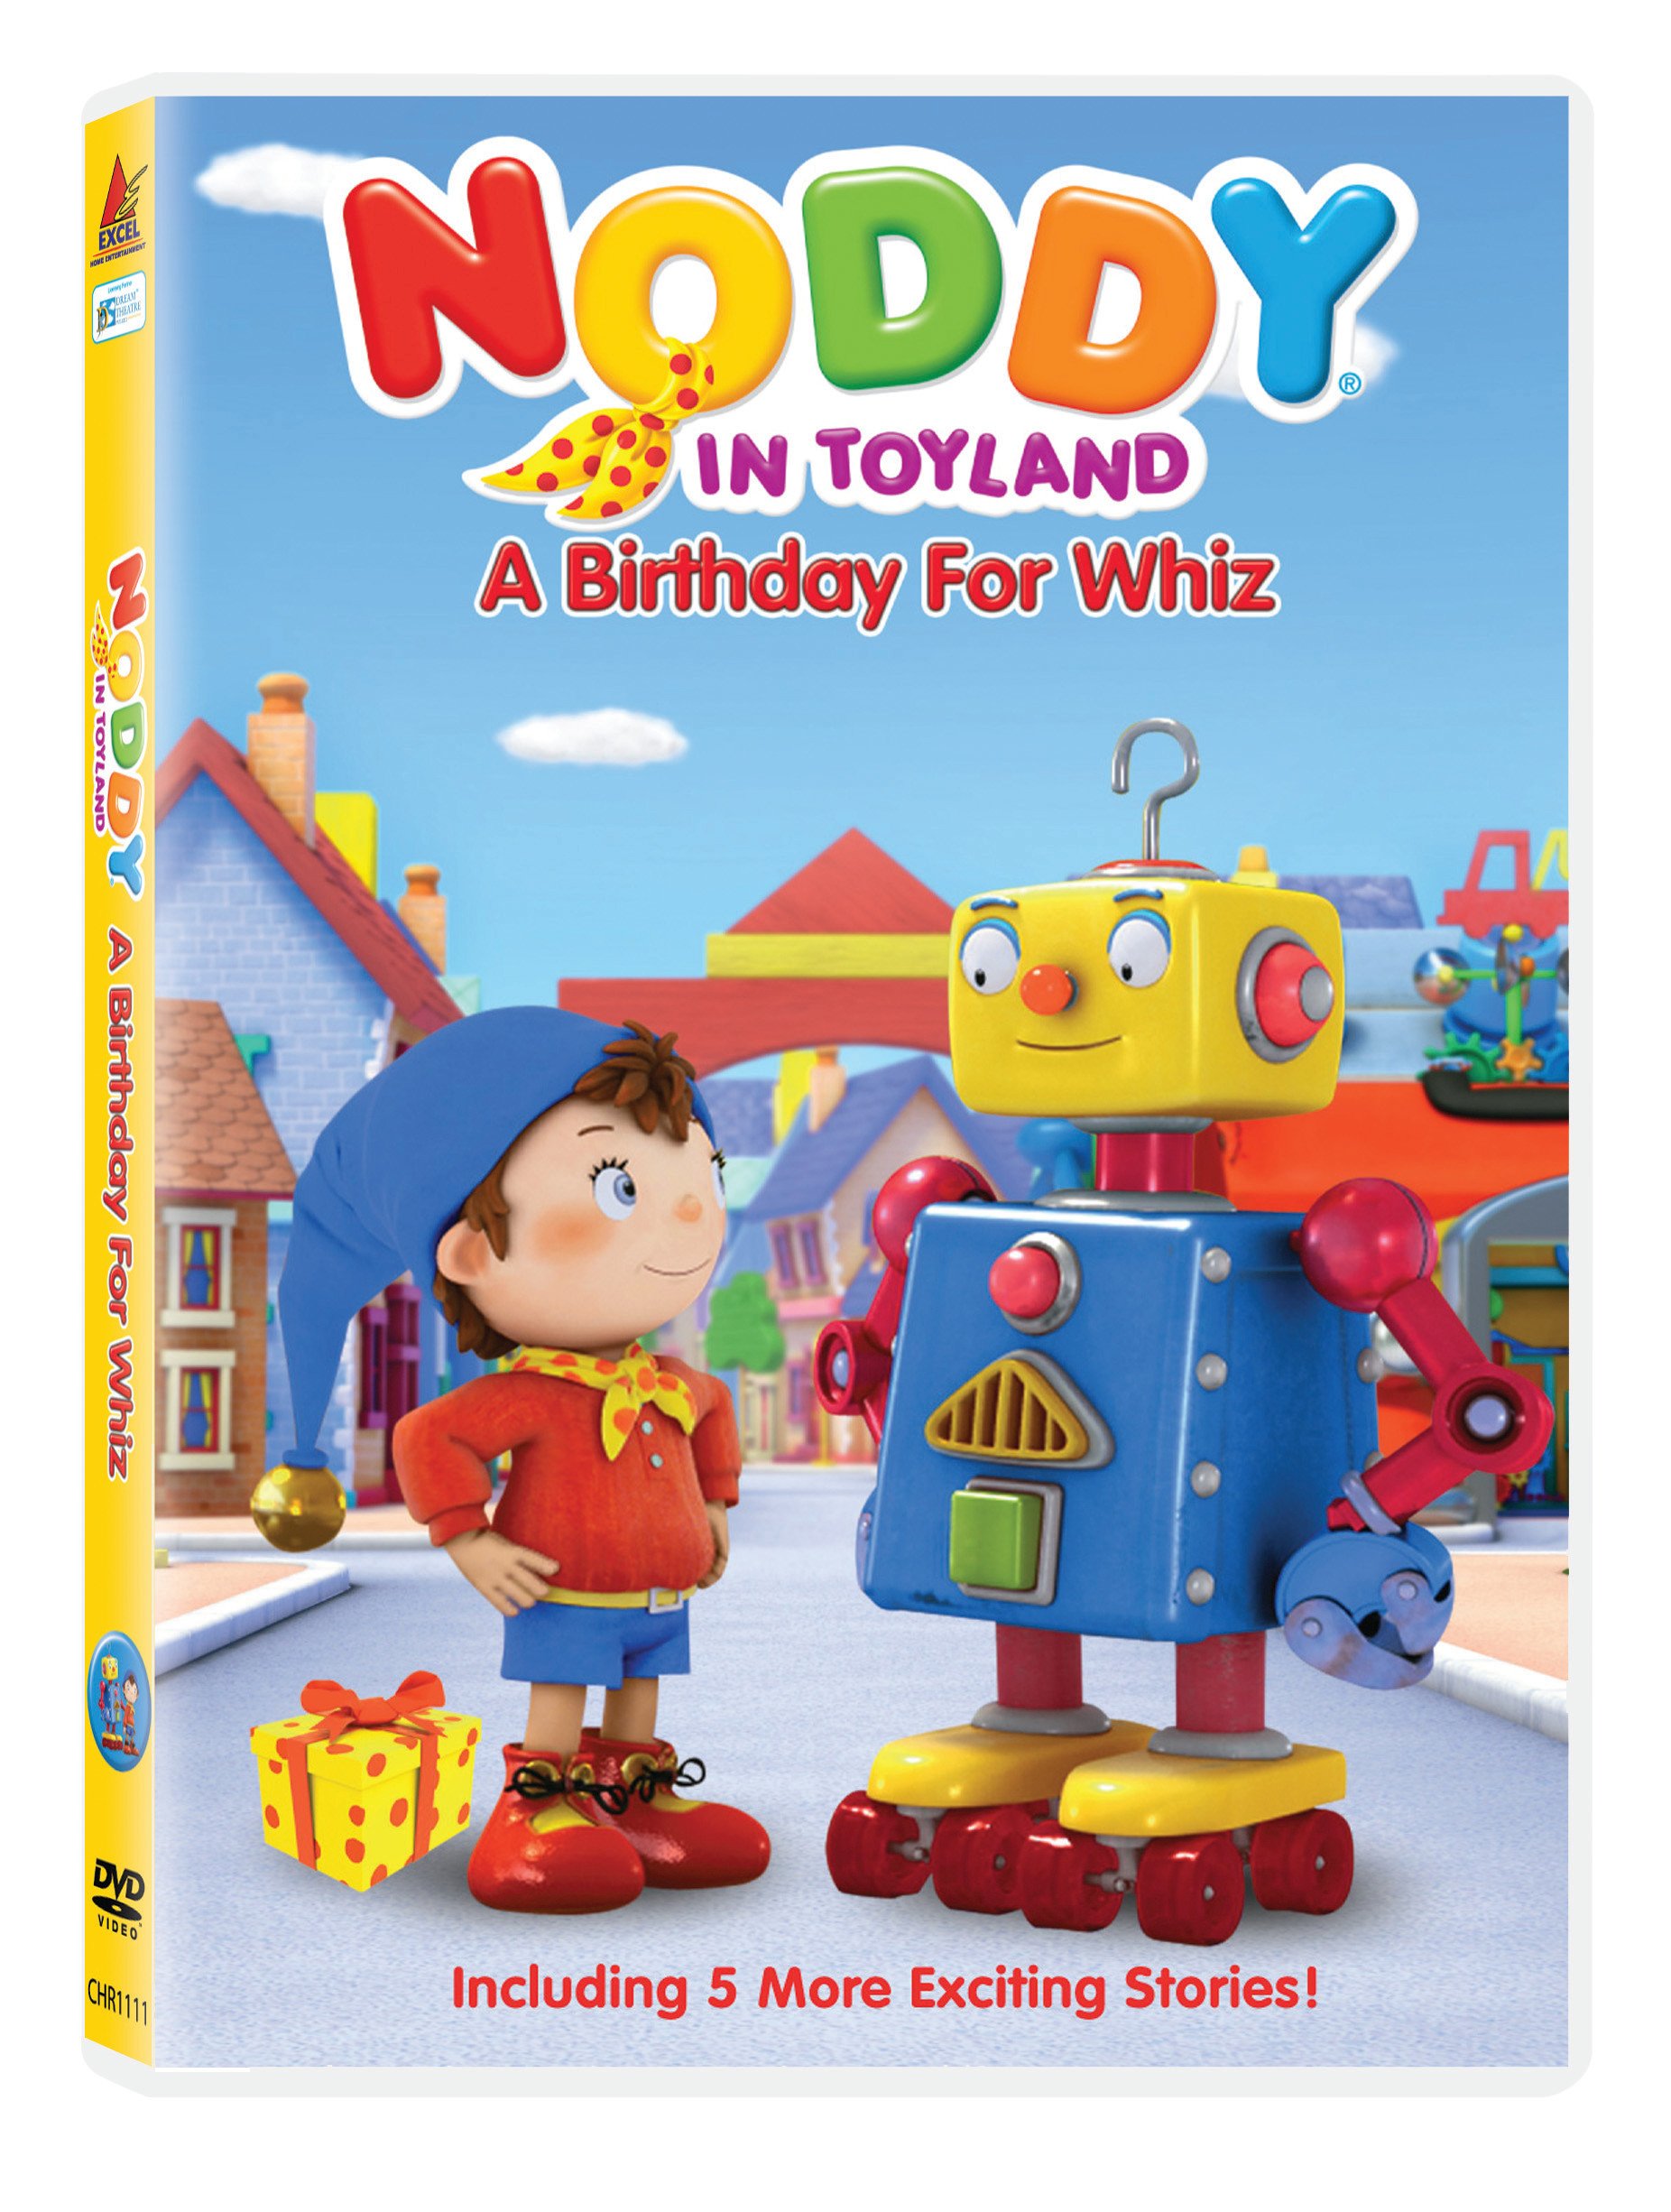 noddy-in-toyland-a-birthday-for-whiz-movie-purchase-or-watch-online